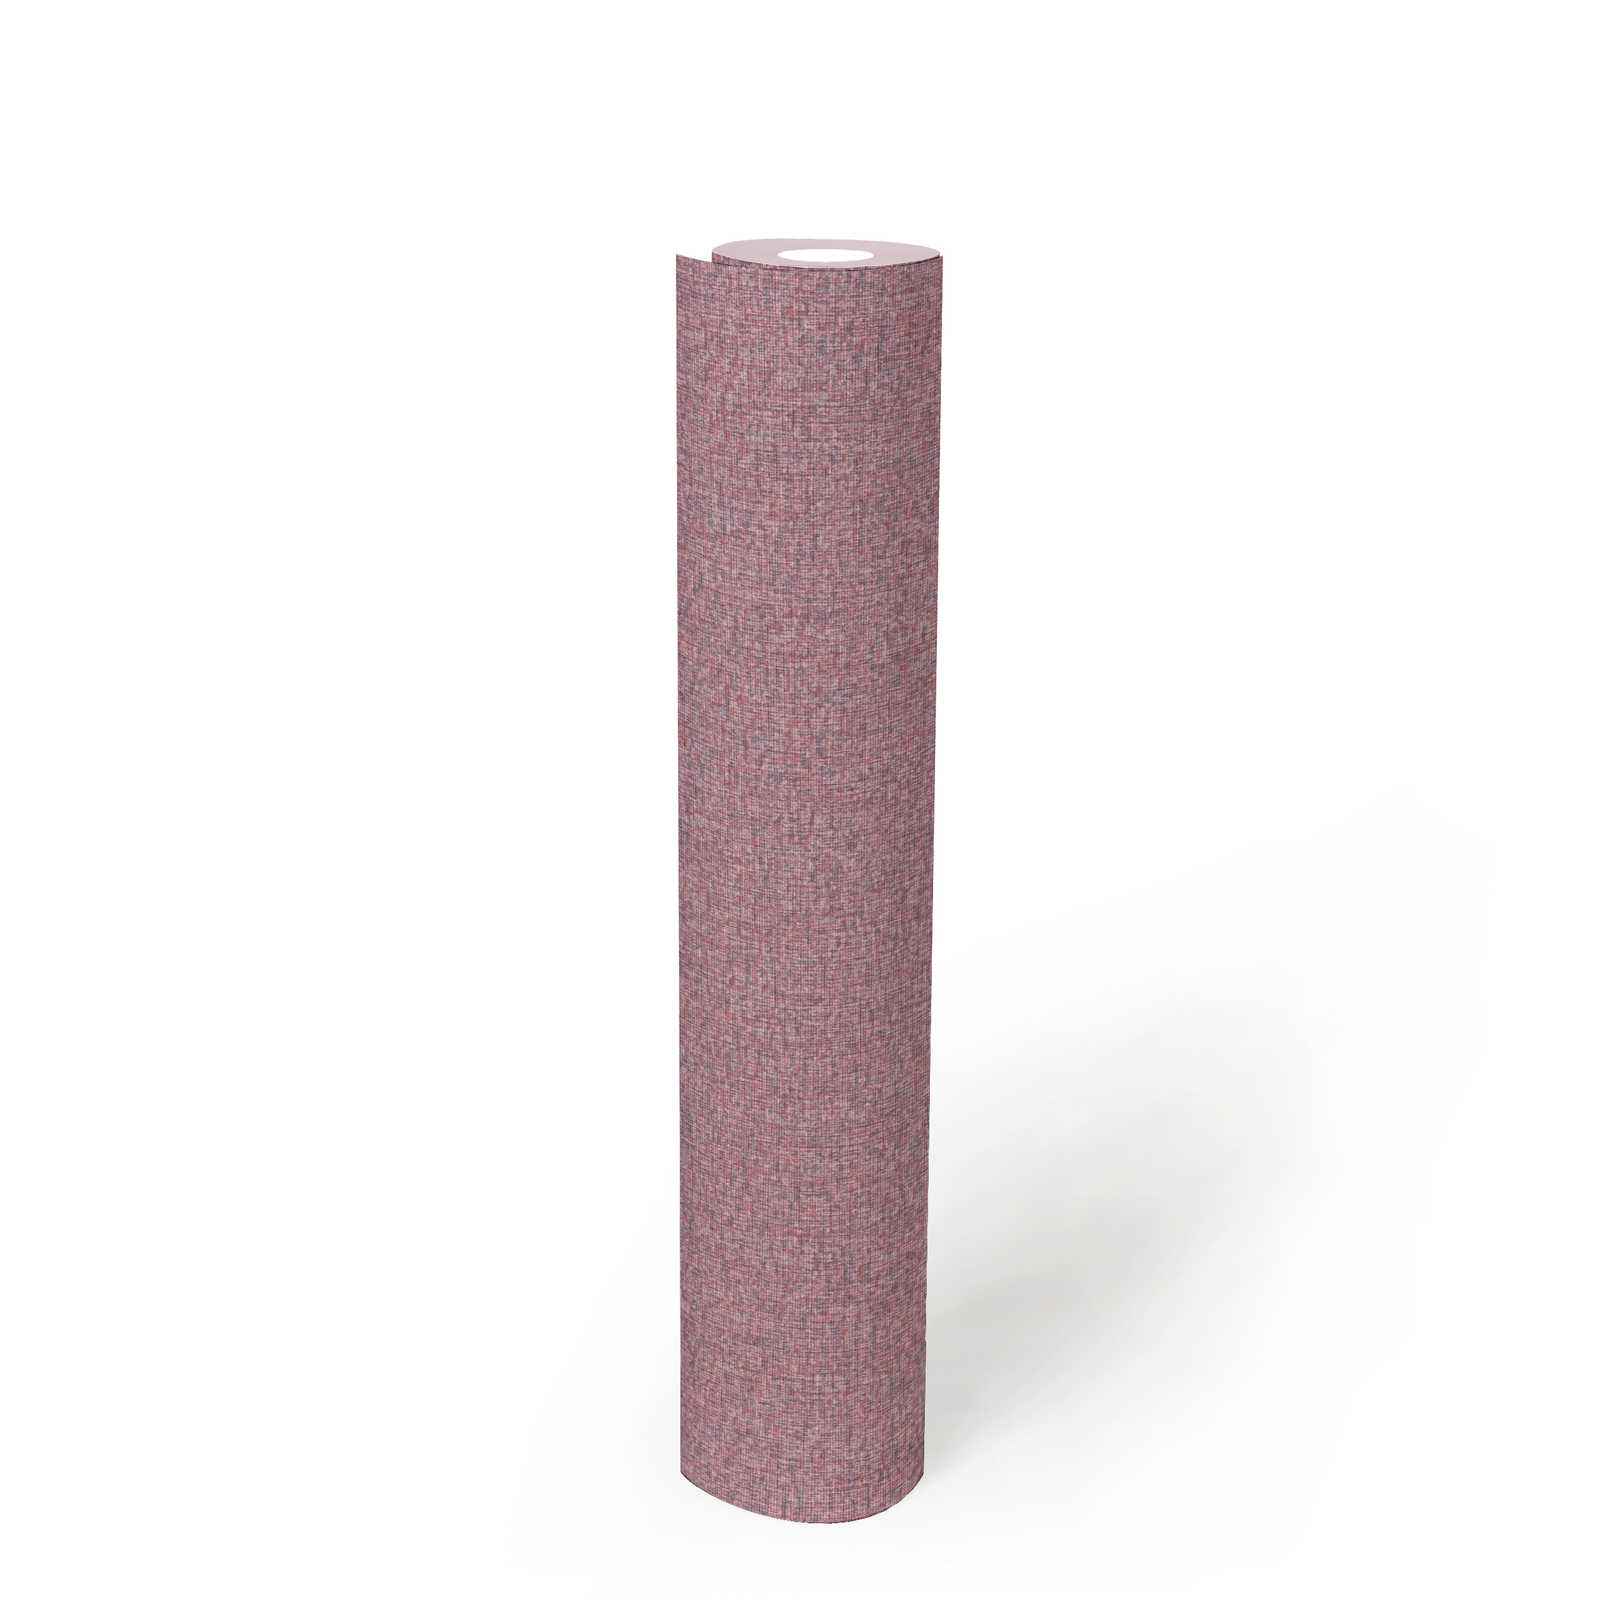             Non-woven wallpaper with fabric structure plain, matt - violet, pink
        